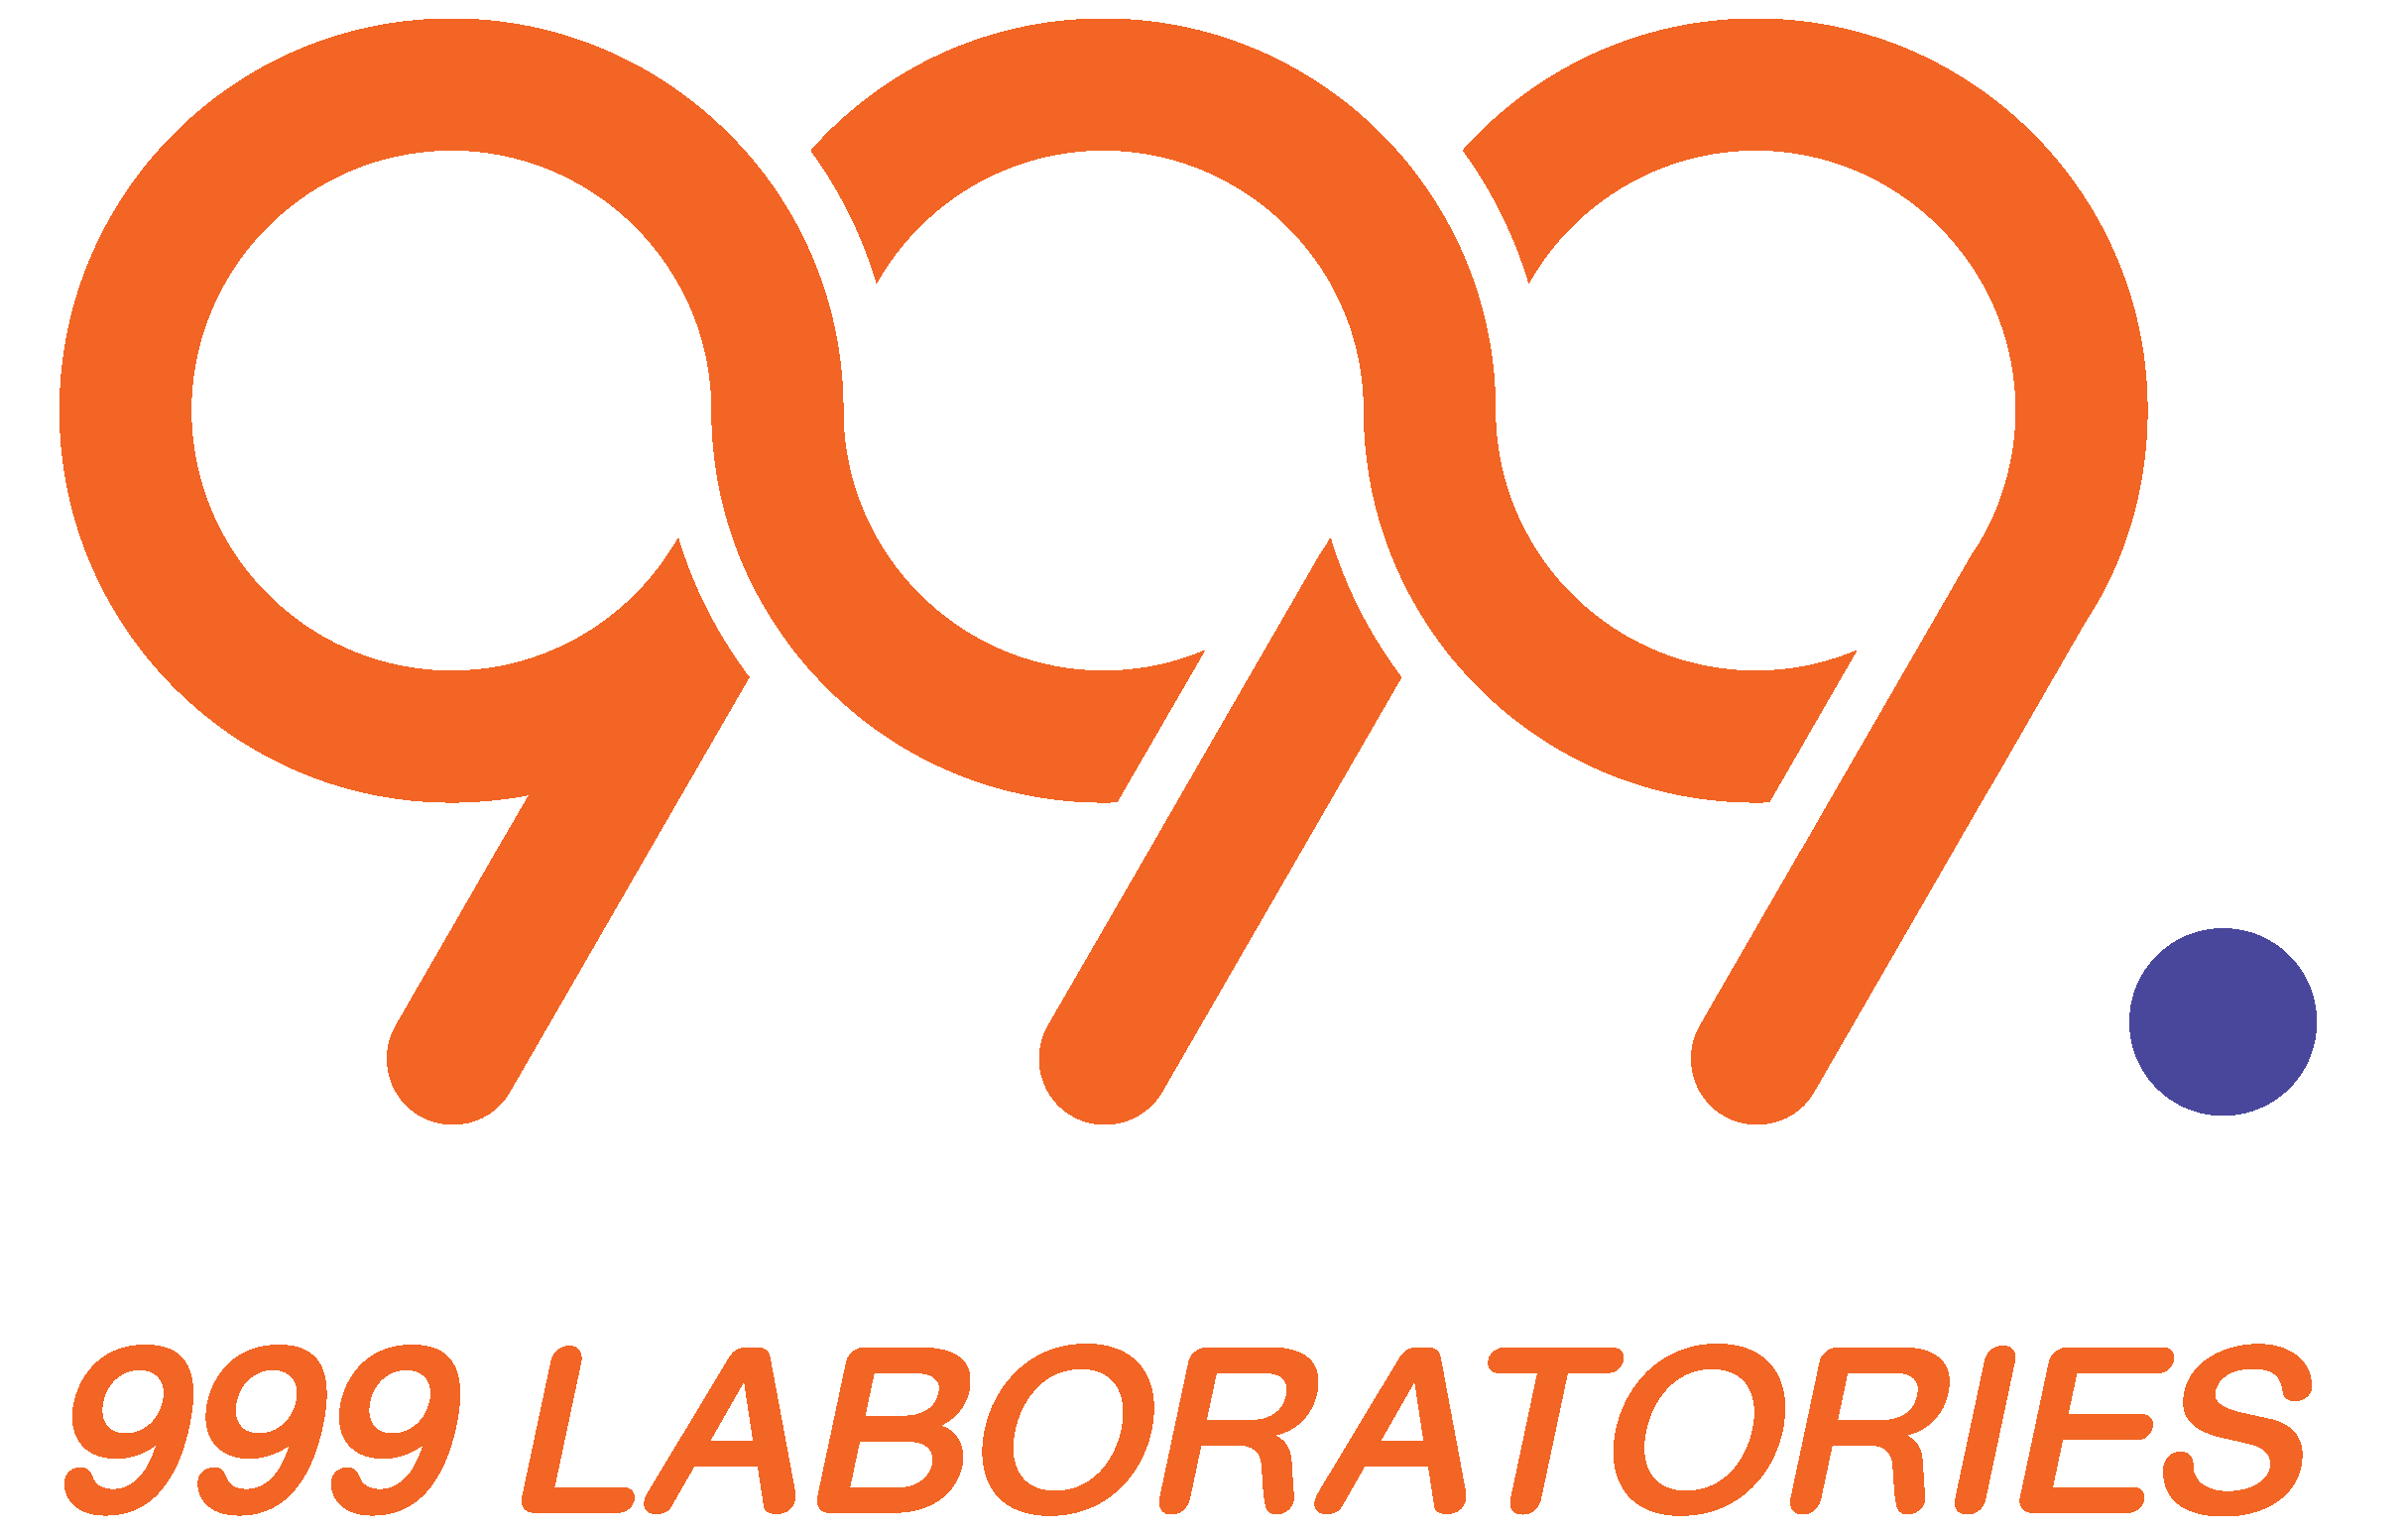 999 Laboratories